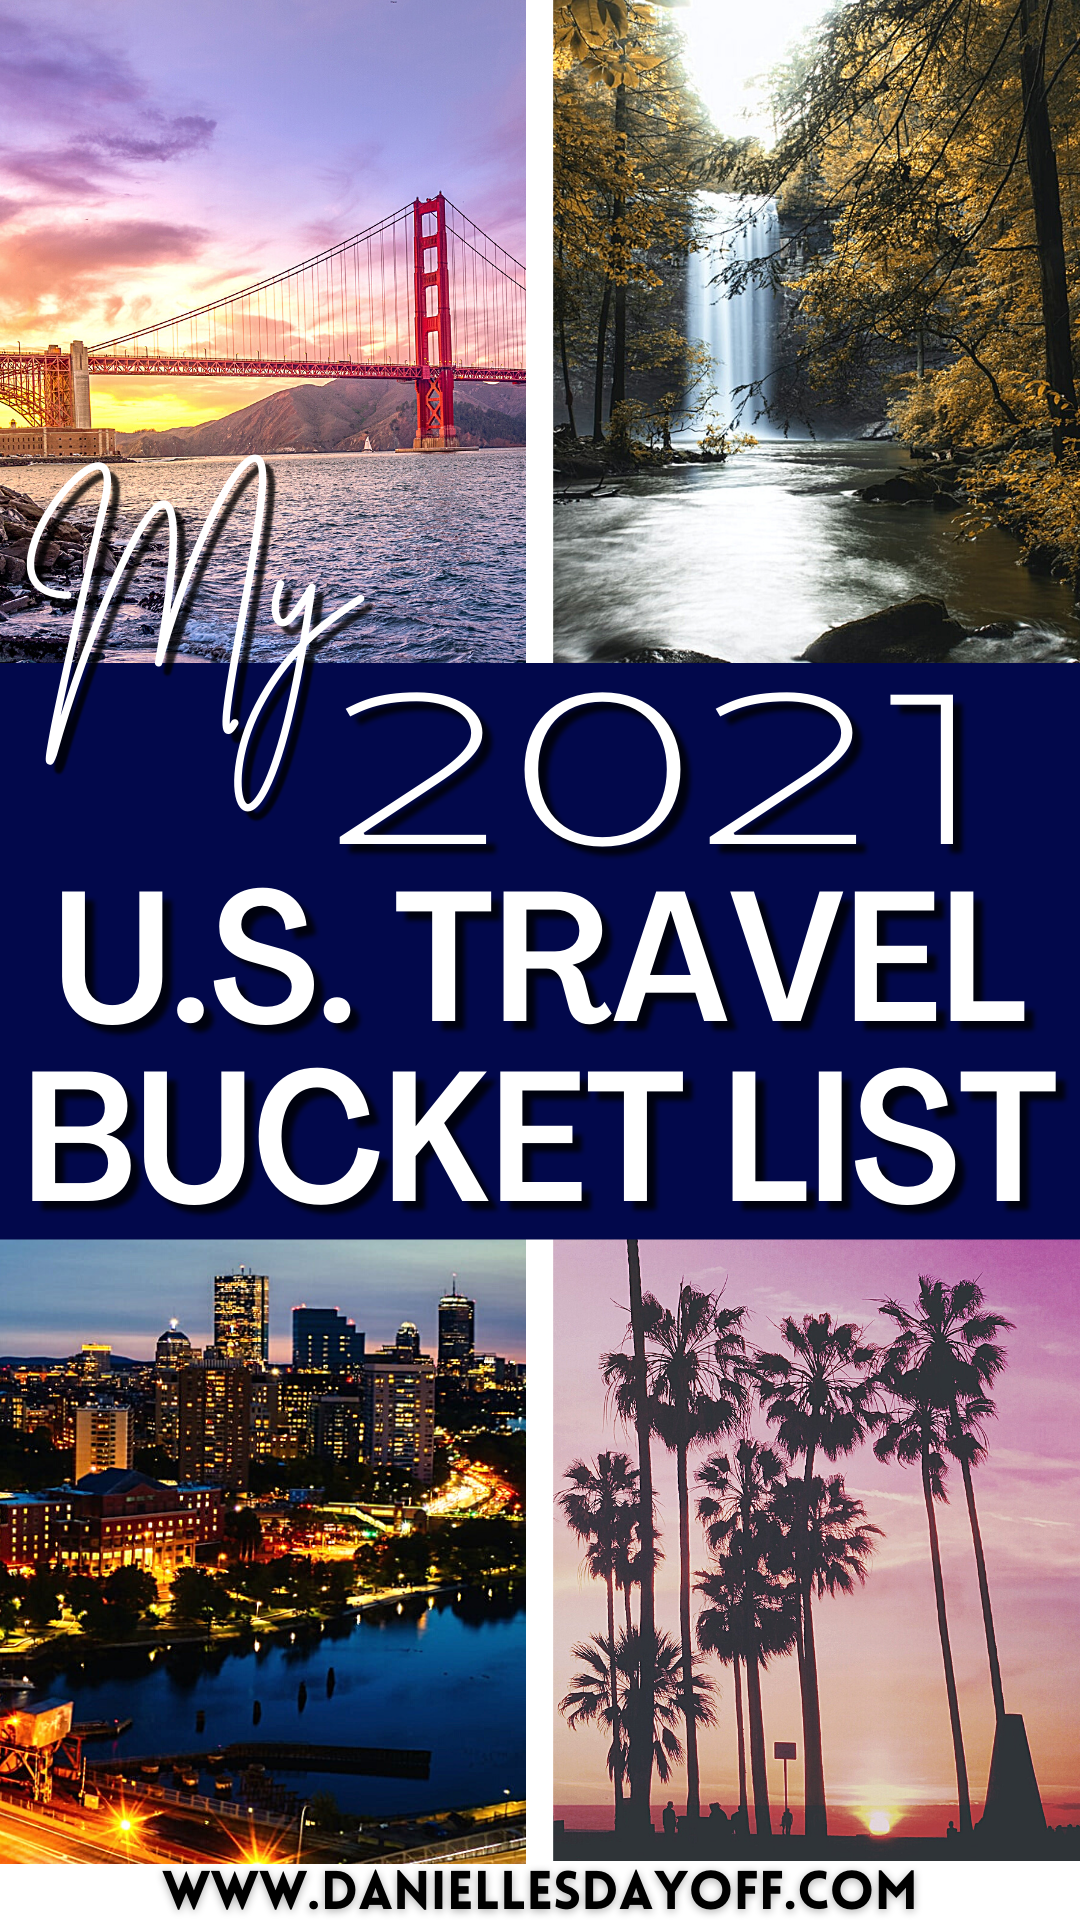 2021 u.s. travel bucket list